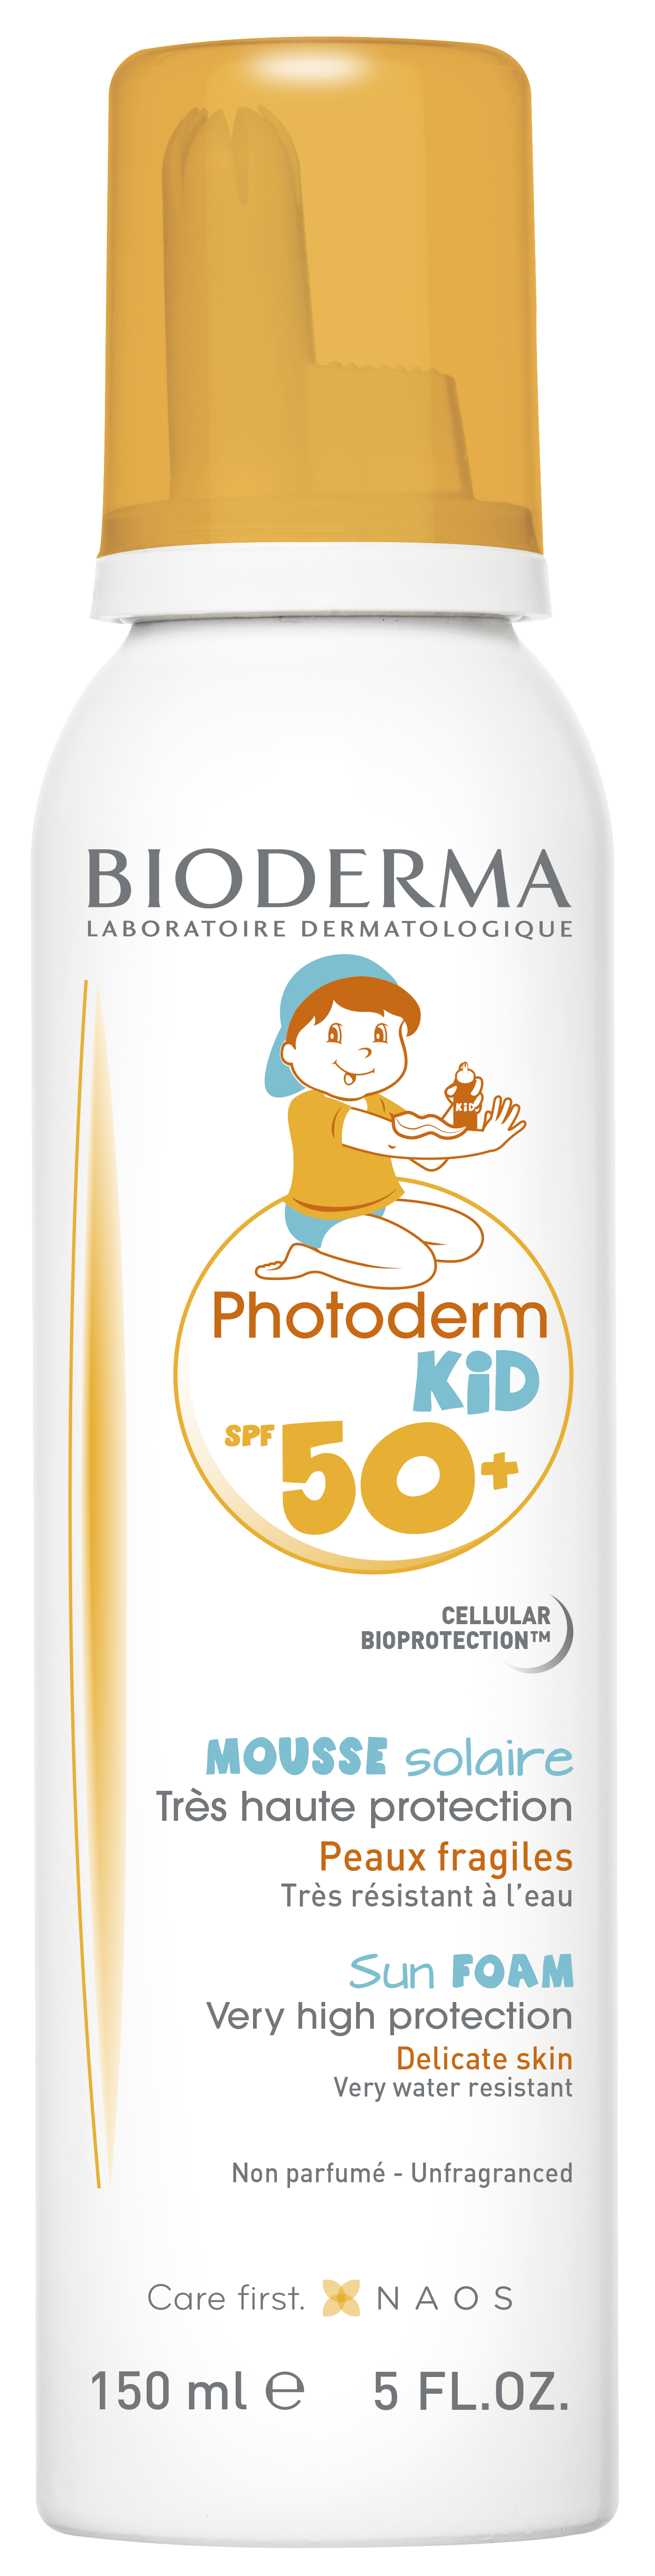 Bioderma Photoderm Kid SPF50+ Sun Foam for Delicate Skin 150ml